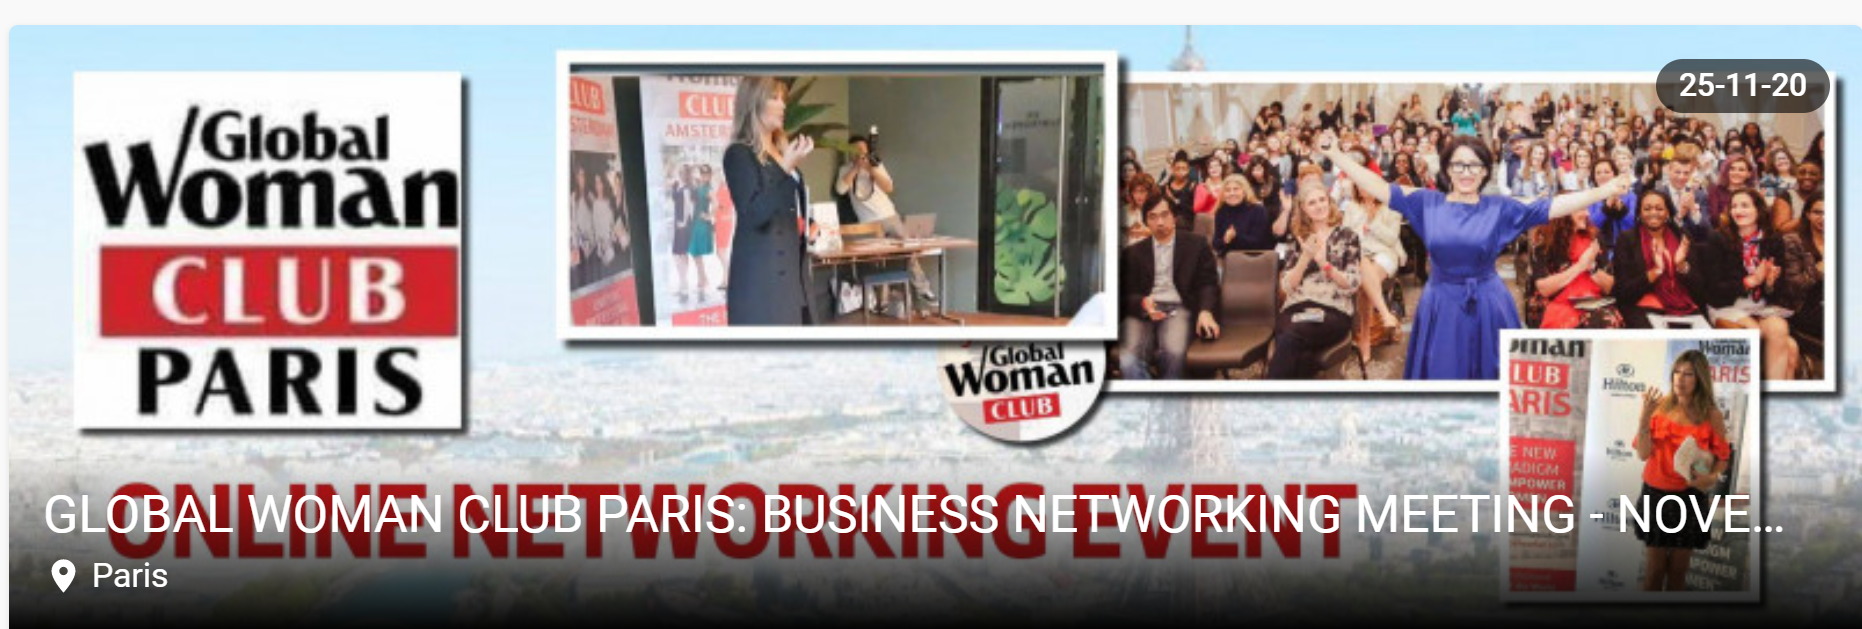 GLOBAL WOMAN CLUB PARIS: BUSINESS NETWORKING MEETING